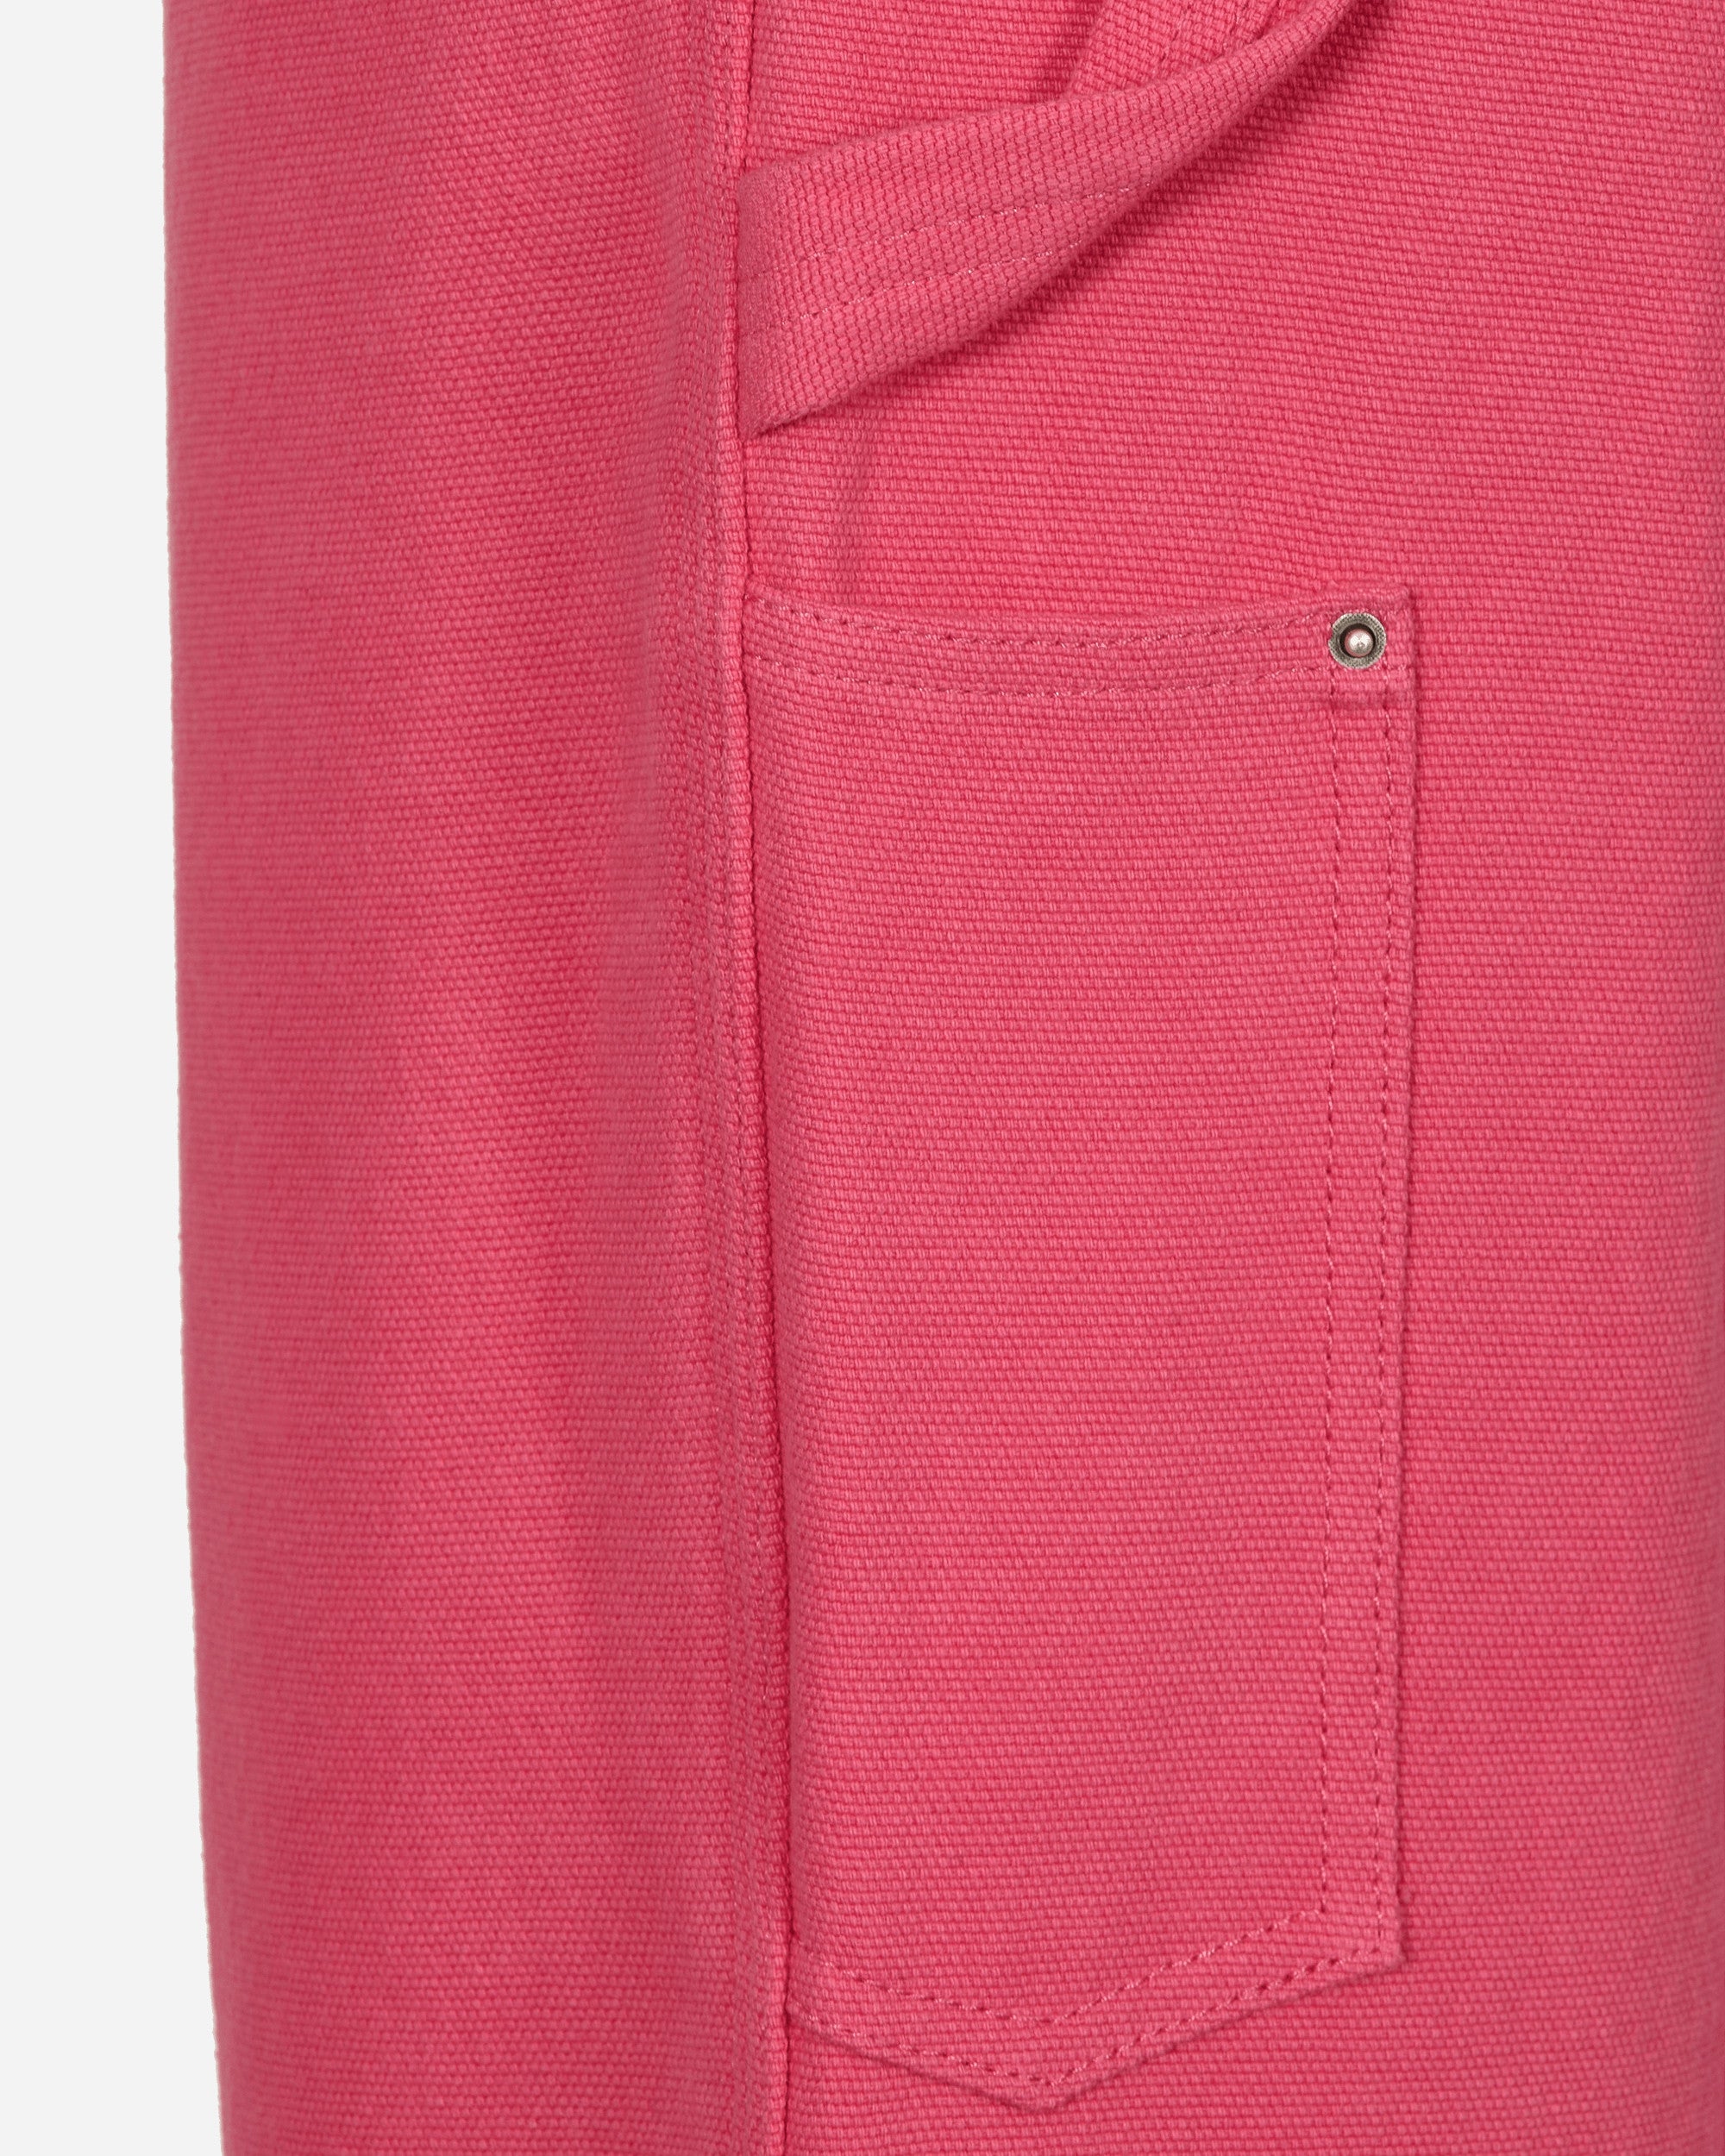 Sky High Farm Workwear Canvas Pants Woven Pink Pants Trousers SHF02P007 2